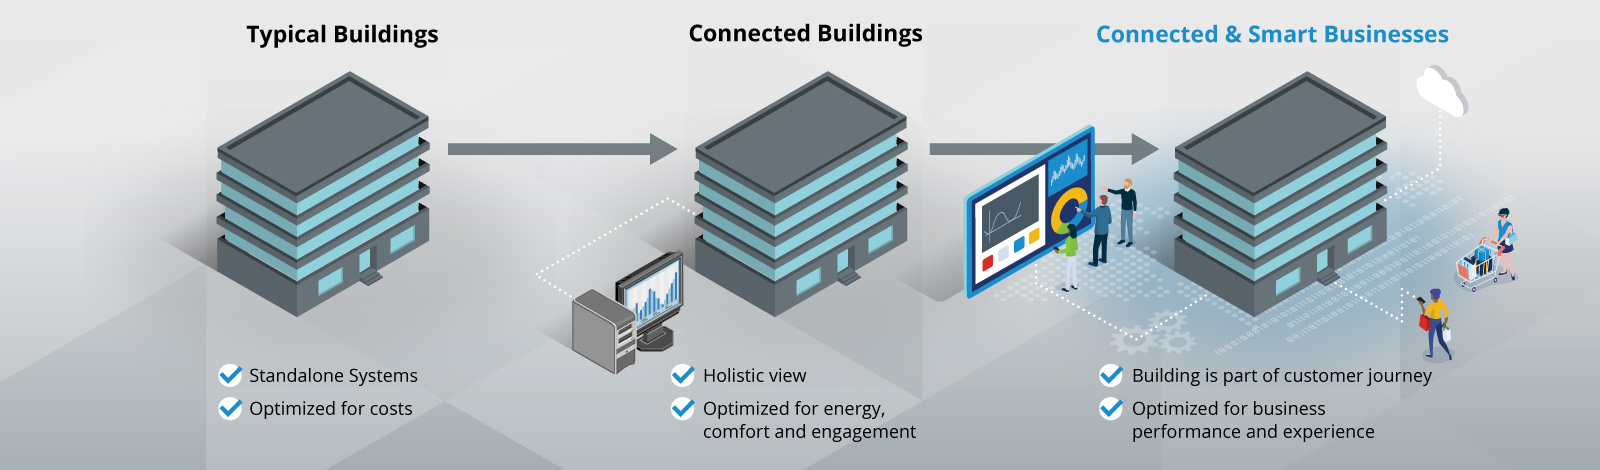 Mindmap illustration comparing Typical Buildings to Connected Buildings to Connected and Smart Businesses